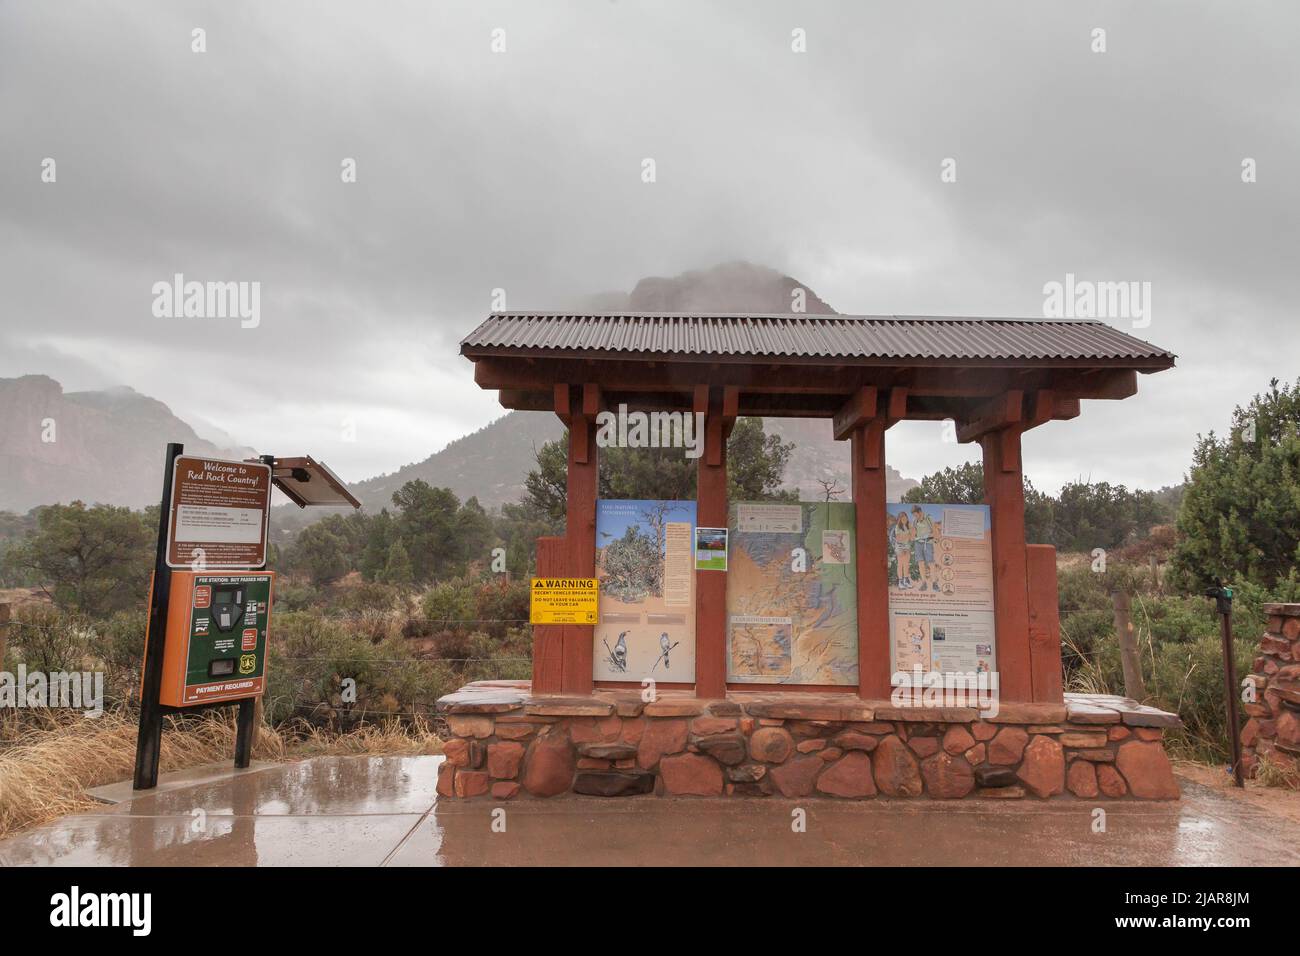 Entry point at Red Rock Tourist Information Center, Sedona, Arizona, USA Stock Photo